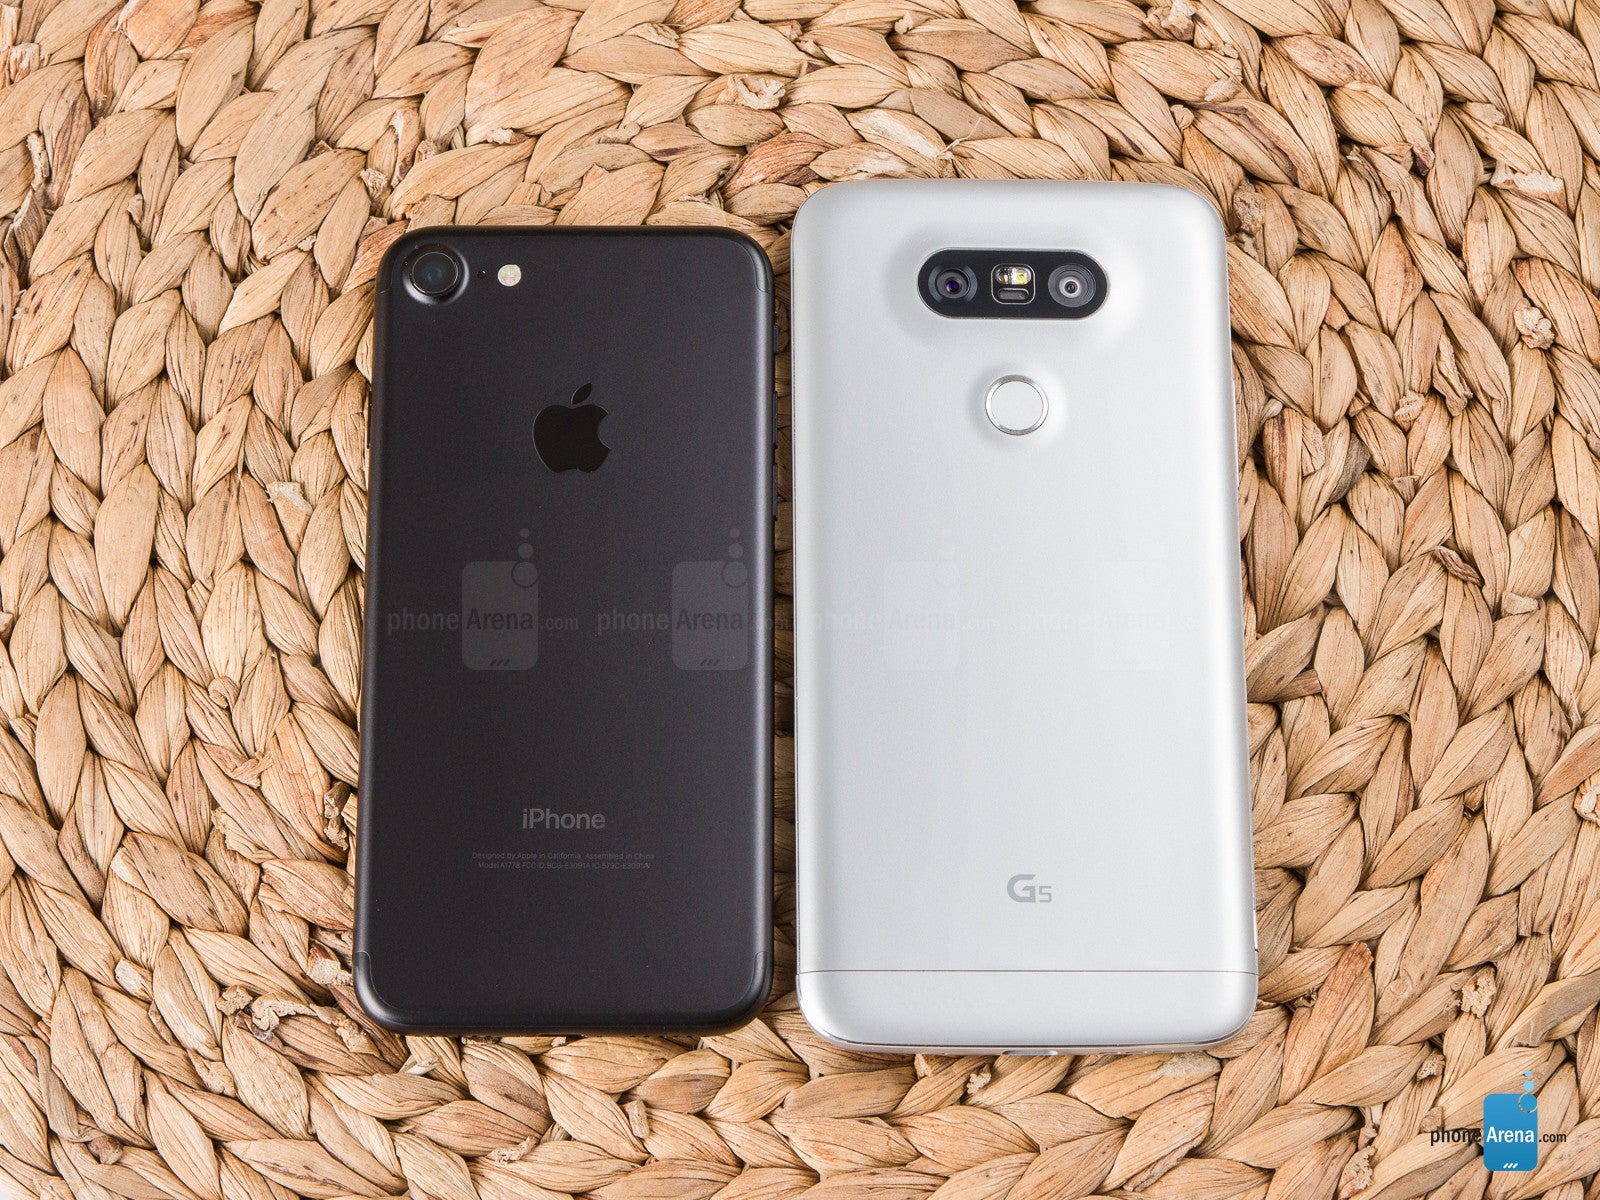 Apple iPhone 7 vs LG G5